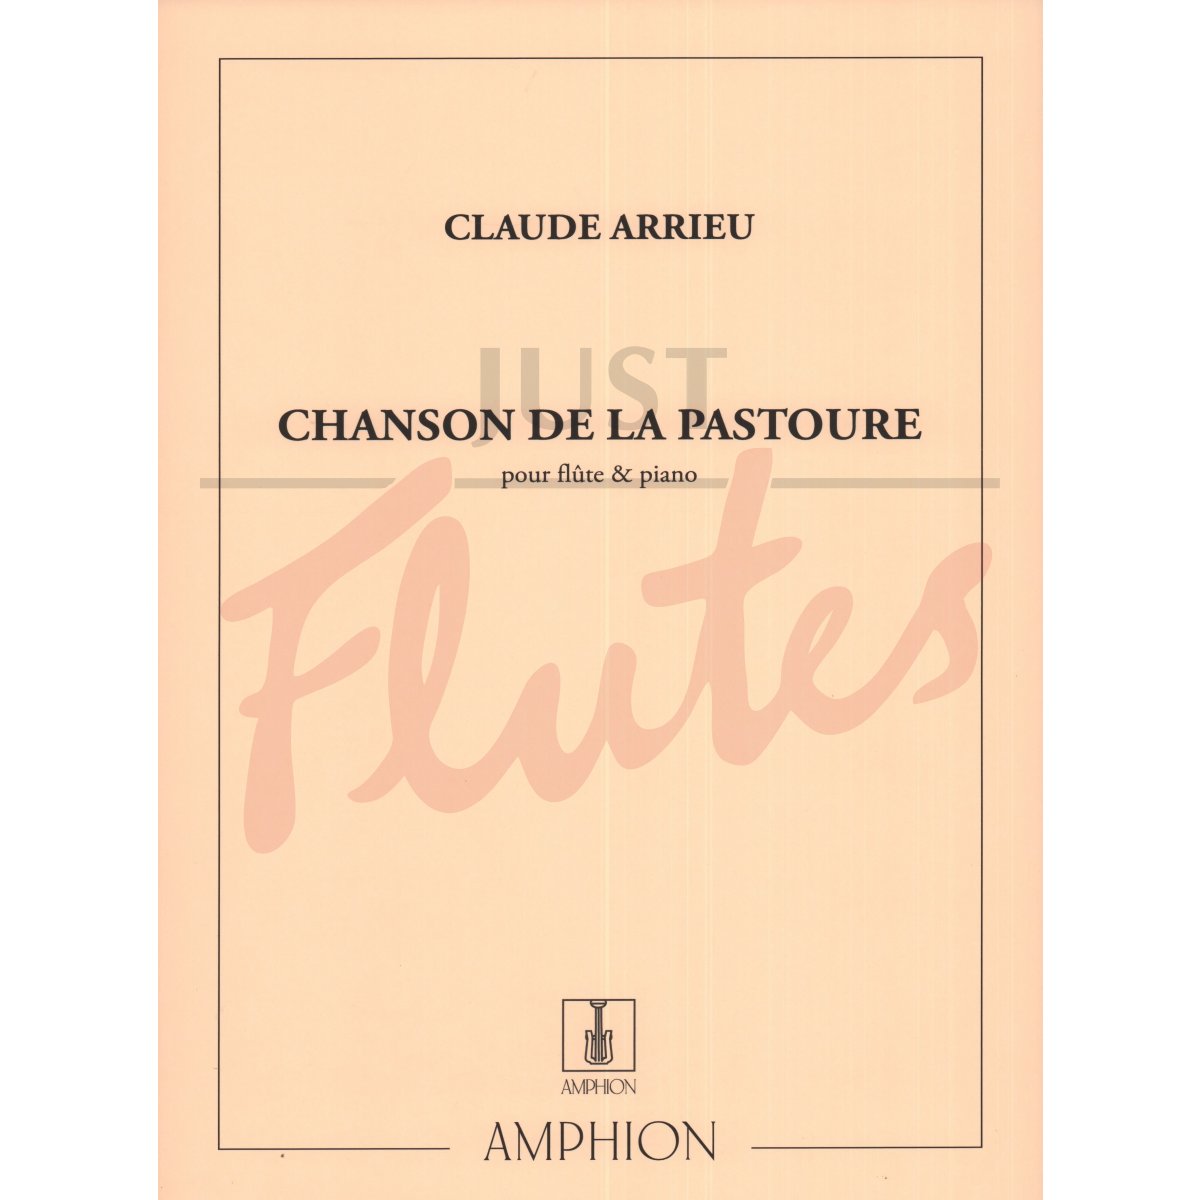 Chanson de la Pastoure for Flute and Piano